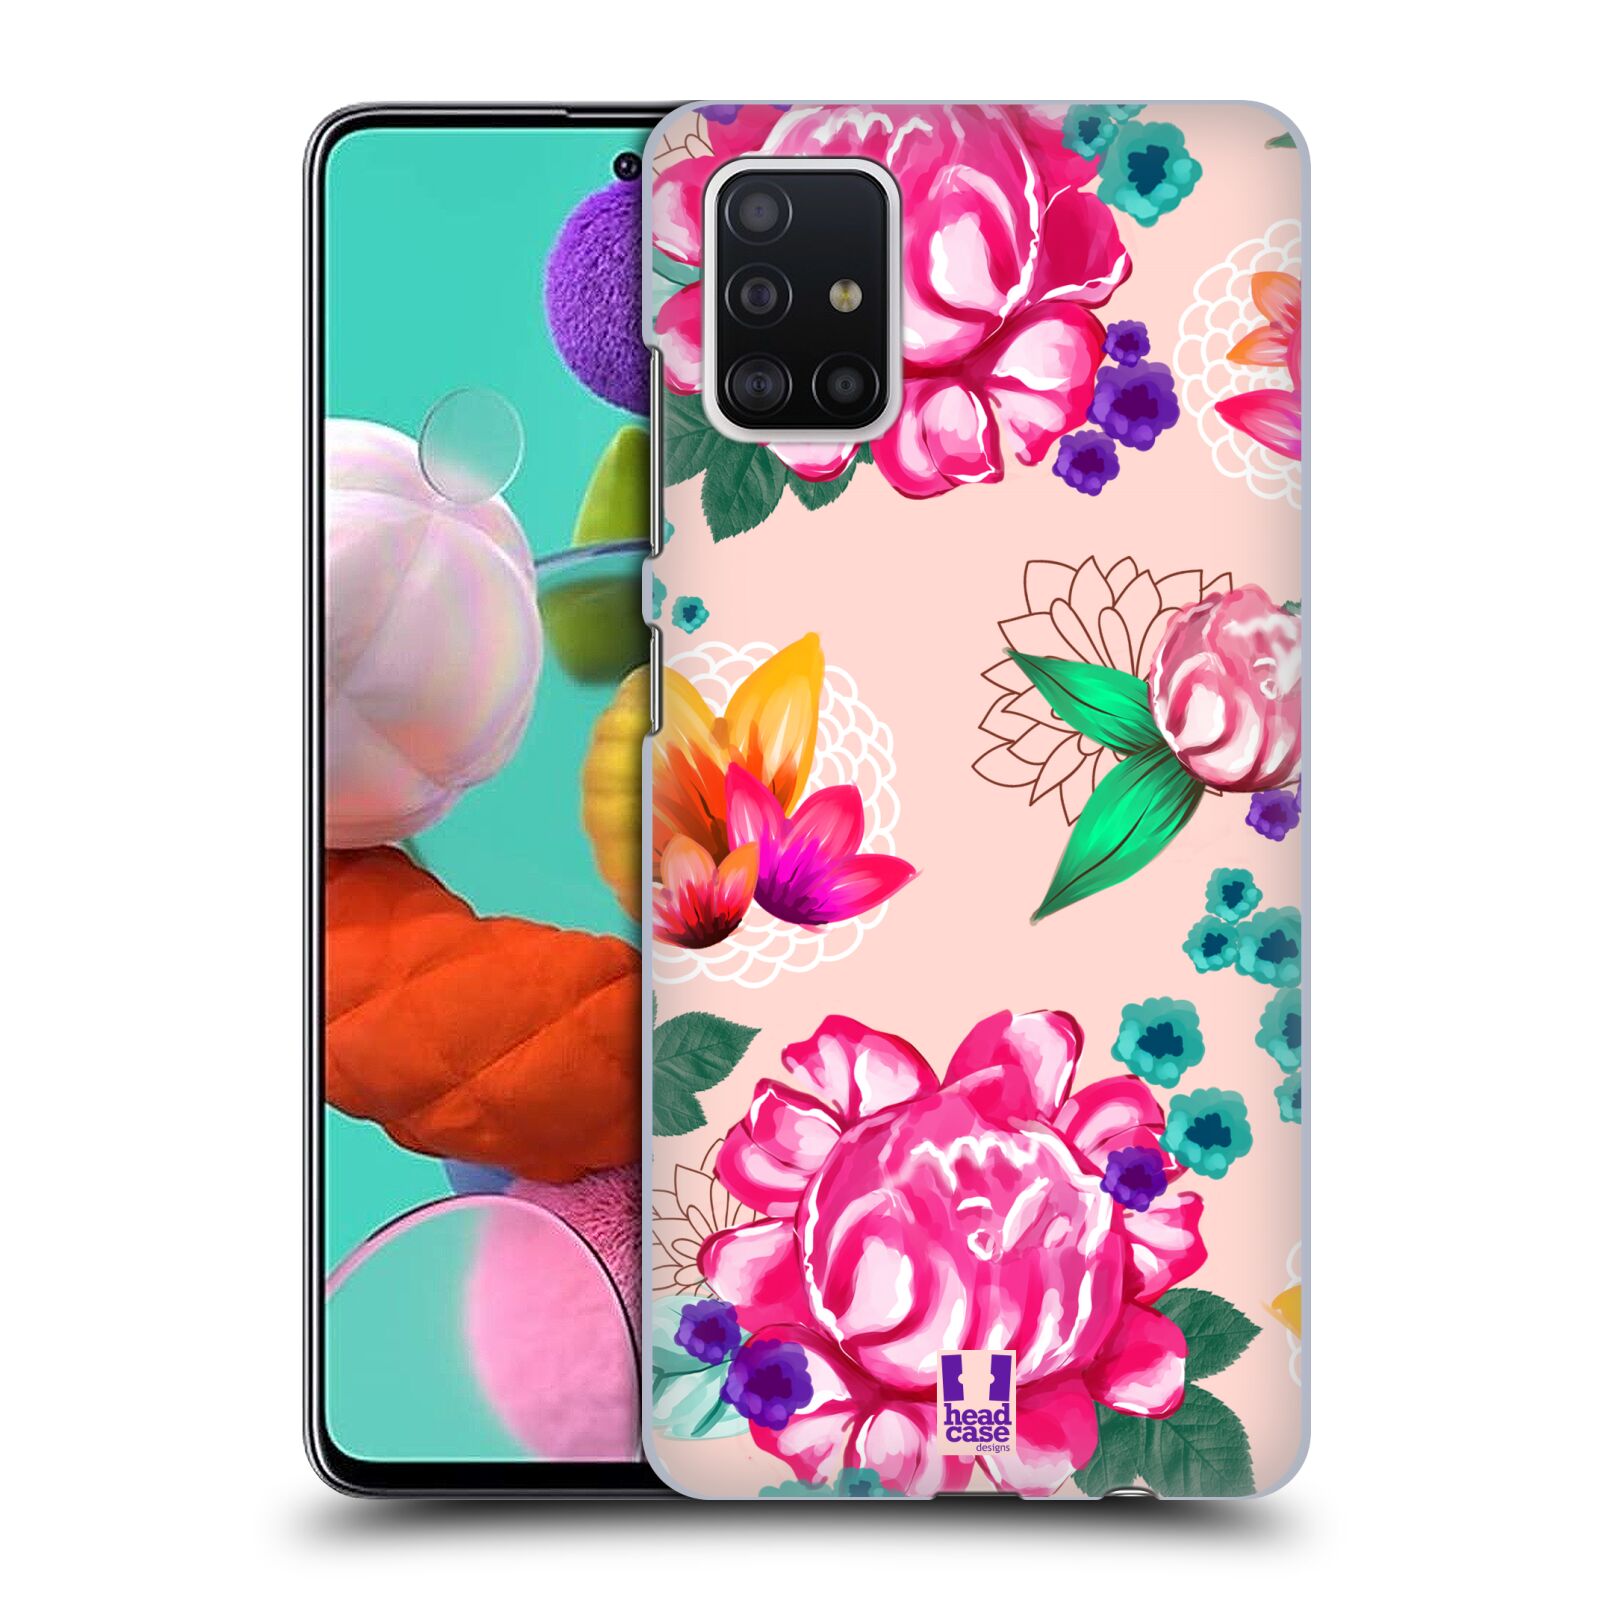 Pouzdro na mobil Samsung Galaxy A51 - HEAD CASE - vzor Malované květiny barevné SVĚTLE RŮŽOVÁ